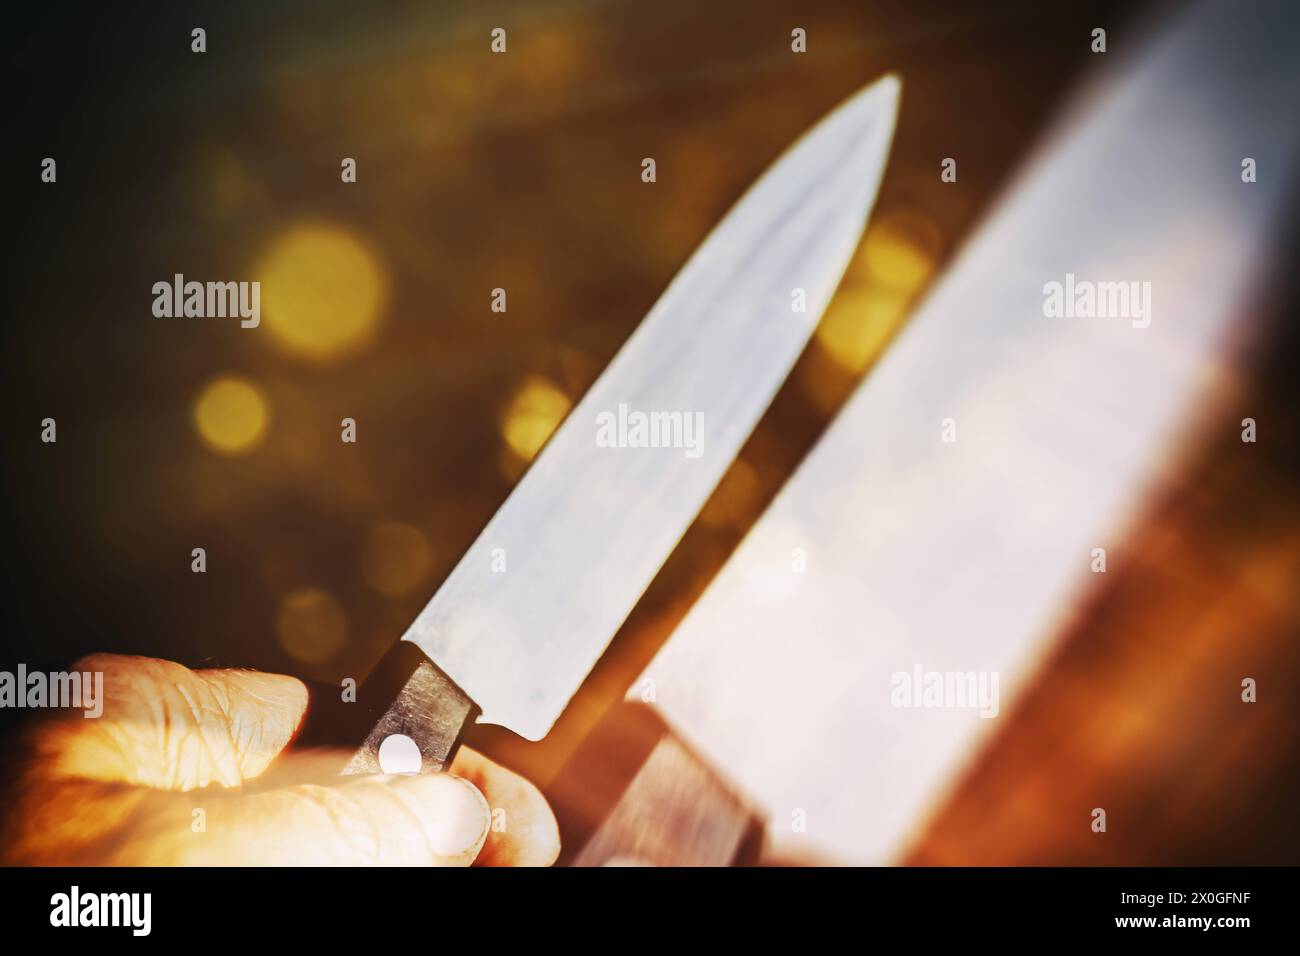 FOTOMONTAGE, Männerhand mit Messer, Symbolfoto Kriminalität *** FOTOMONTAGE, male hand with knife, symbolic photo crime Stock Photo